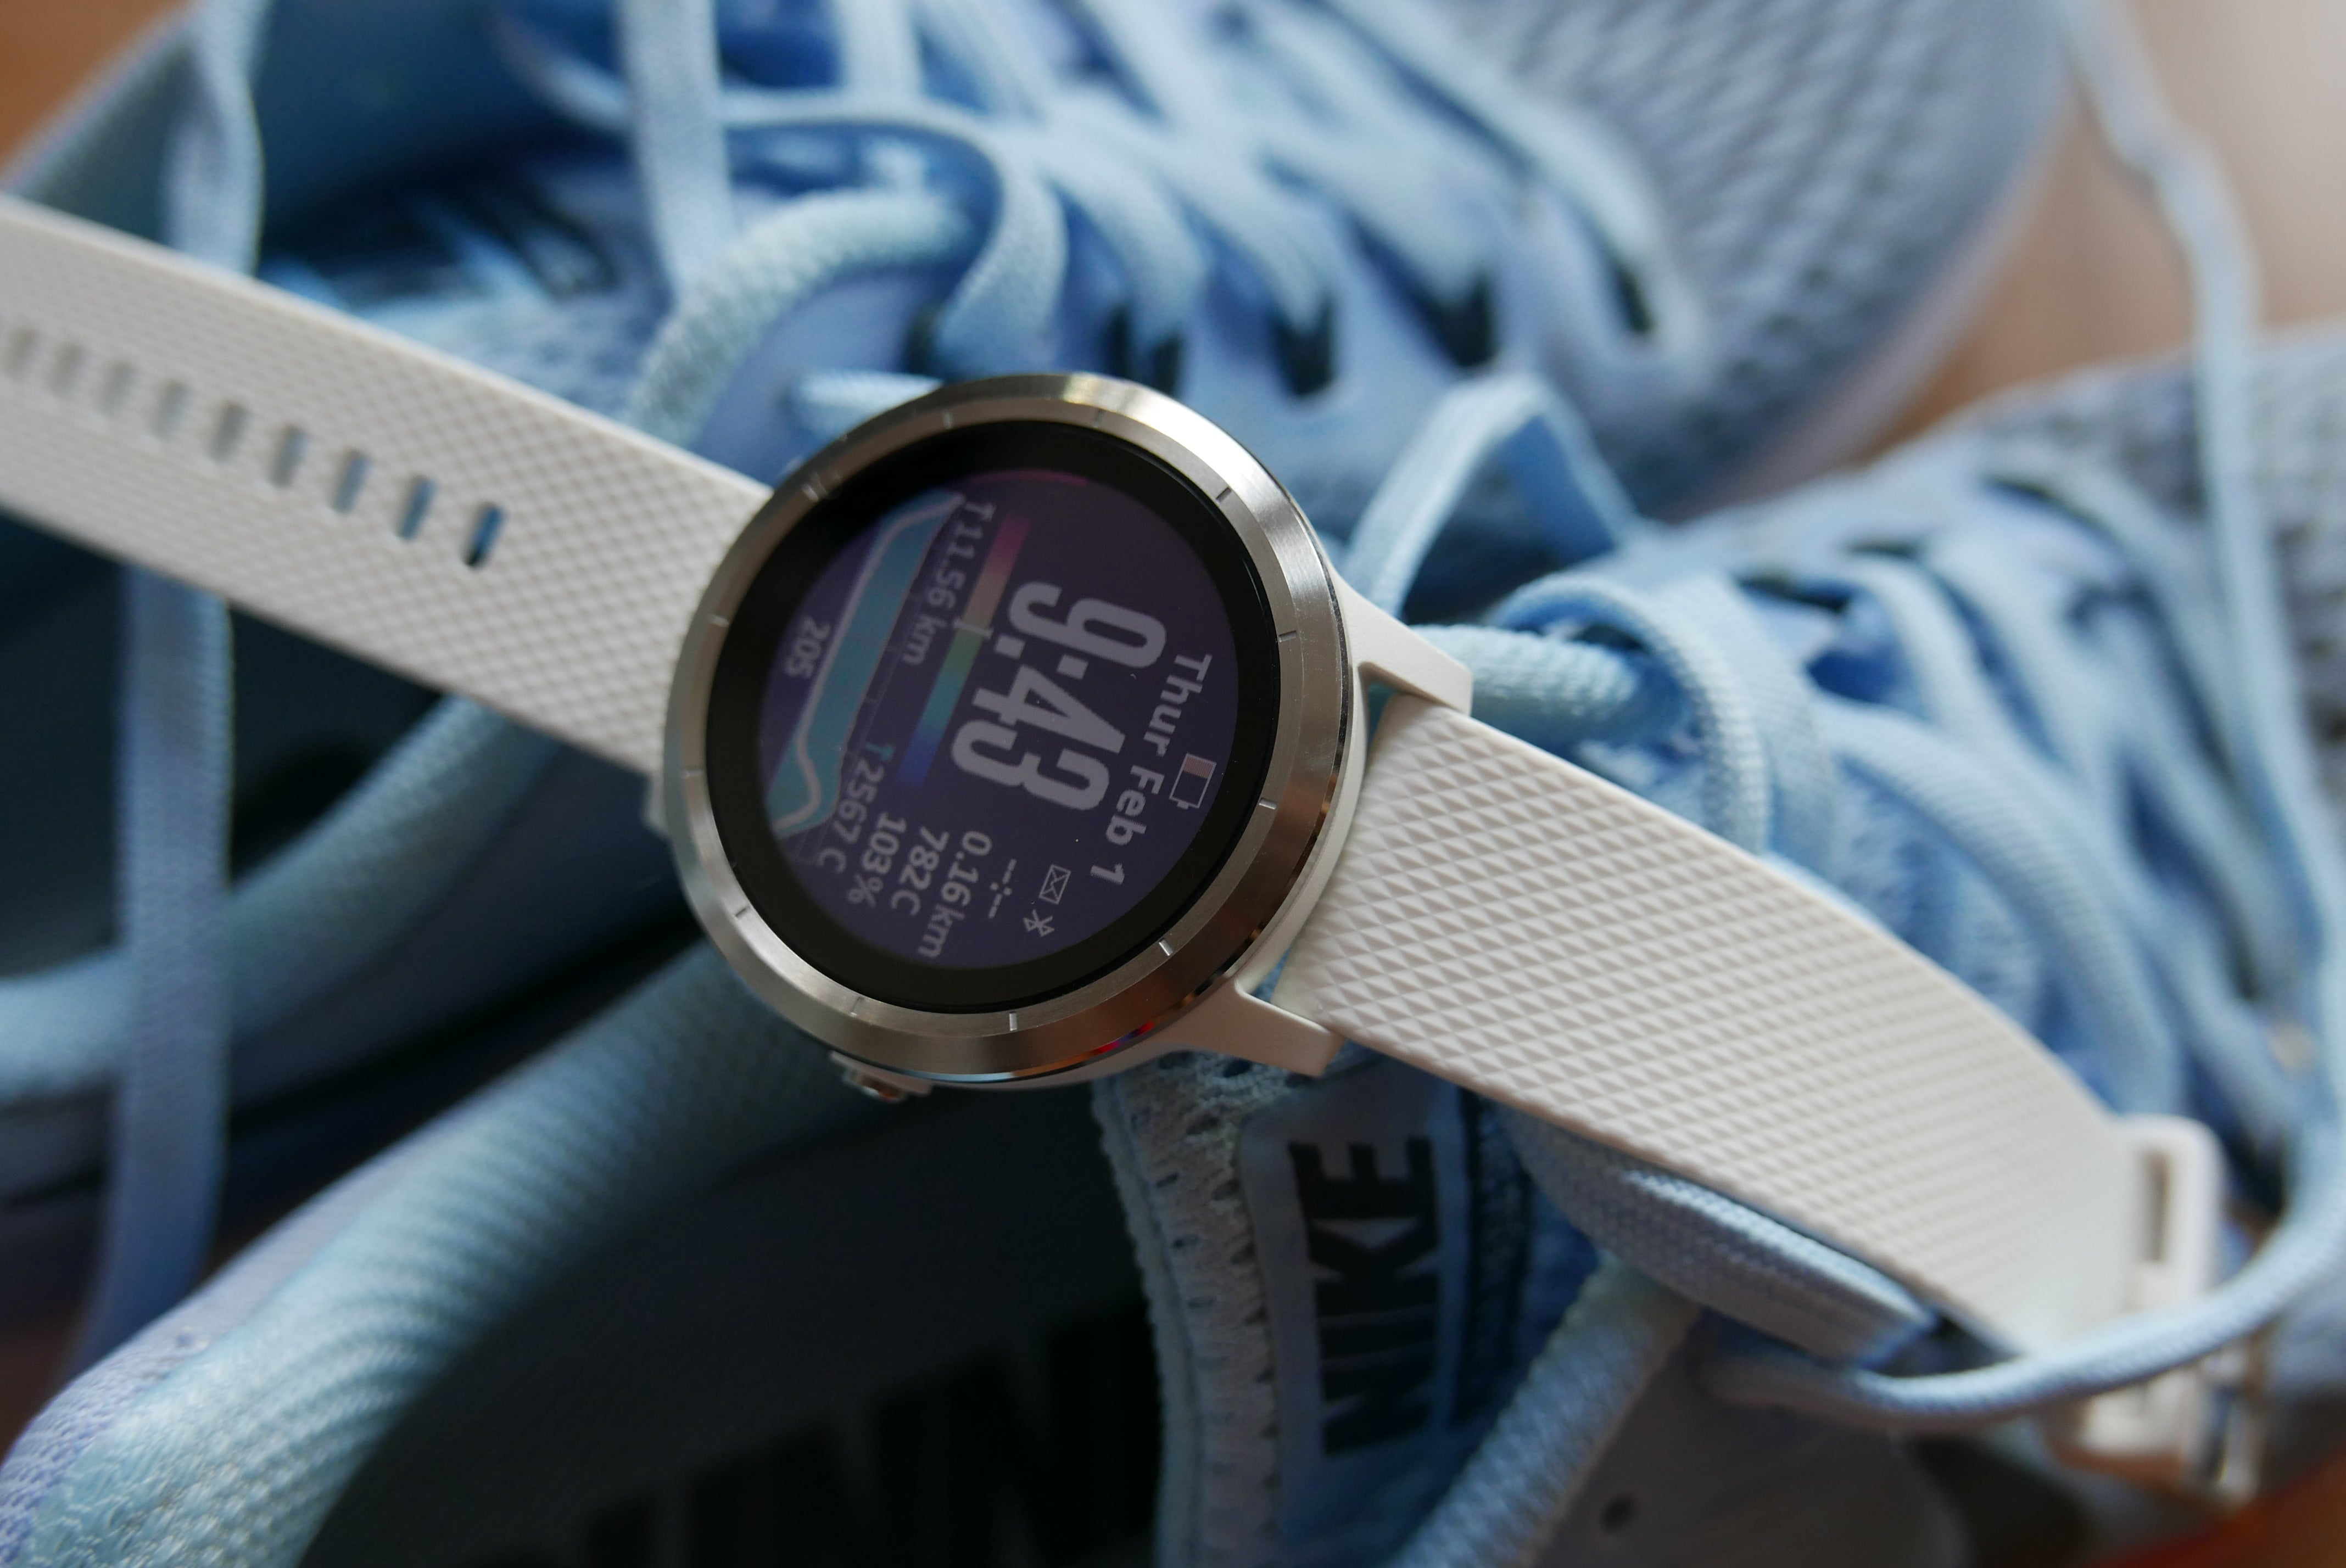 Garmin Vivoactive 3 review: Still a good fitness watch? | Trusted